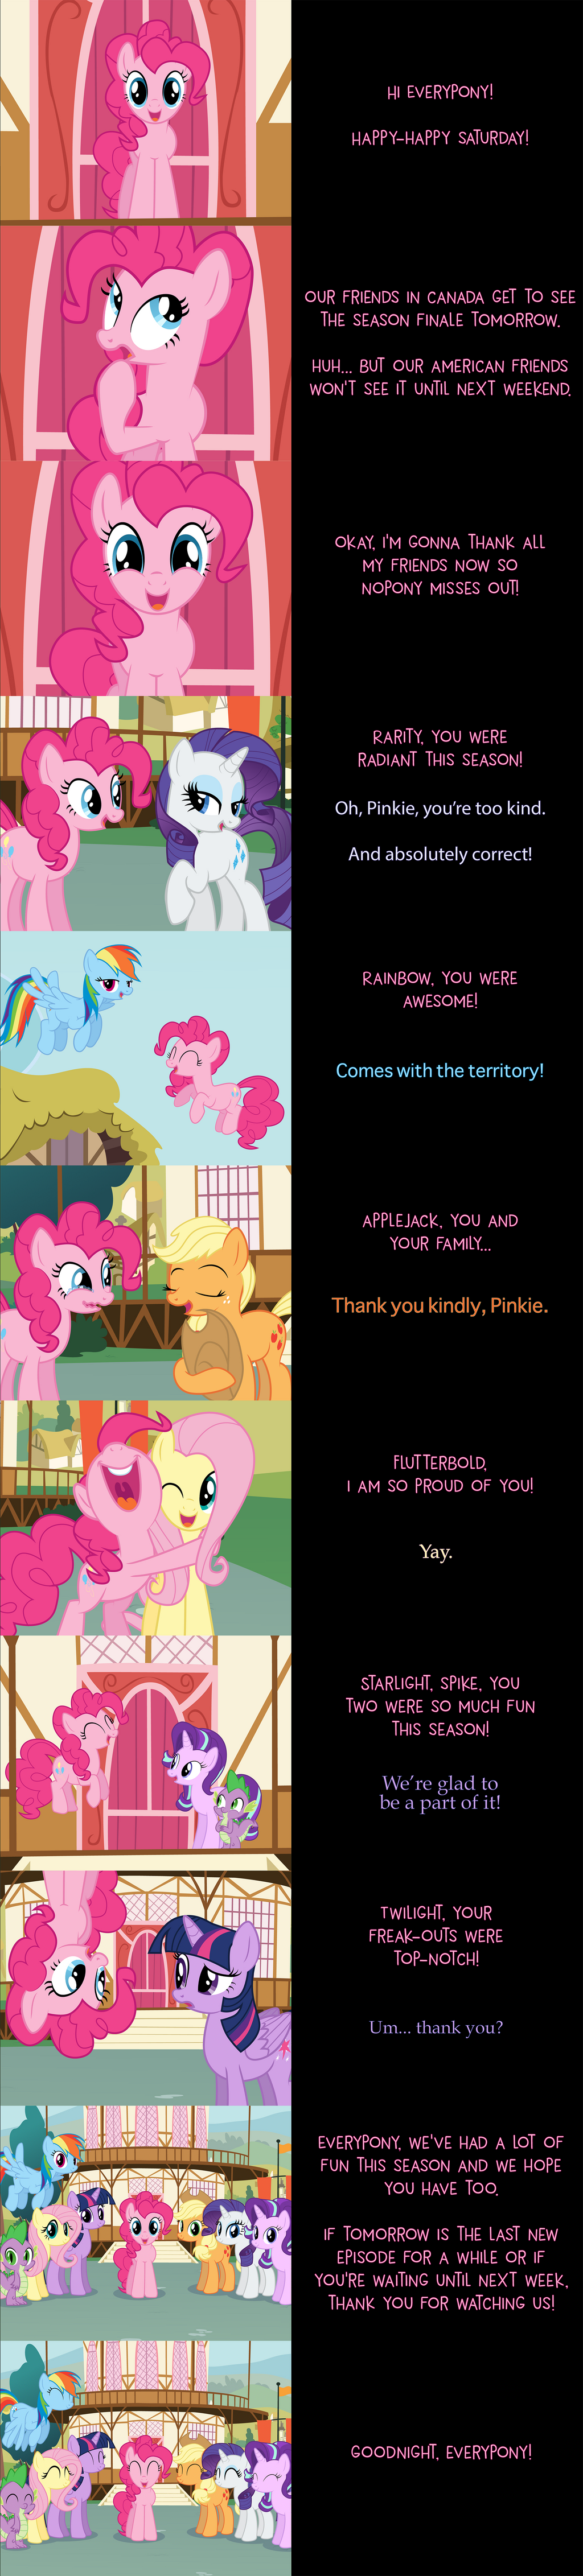 Pinkie Pie Says Goodnight: Thank You